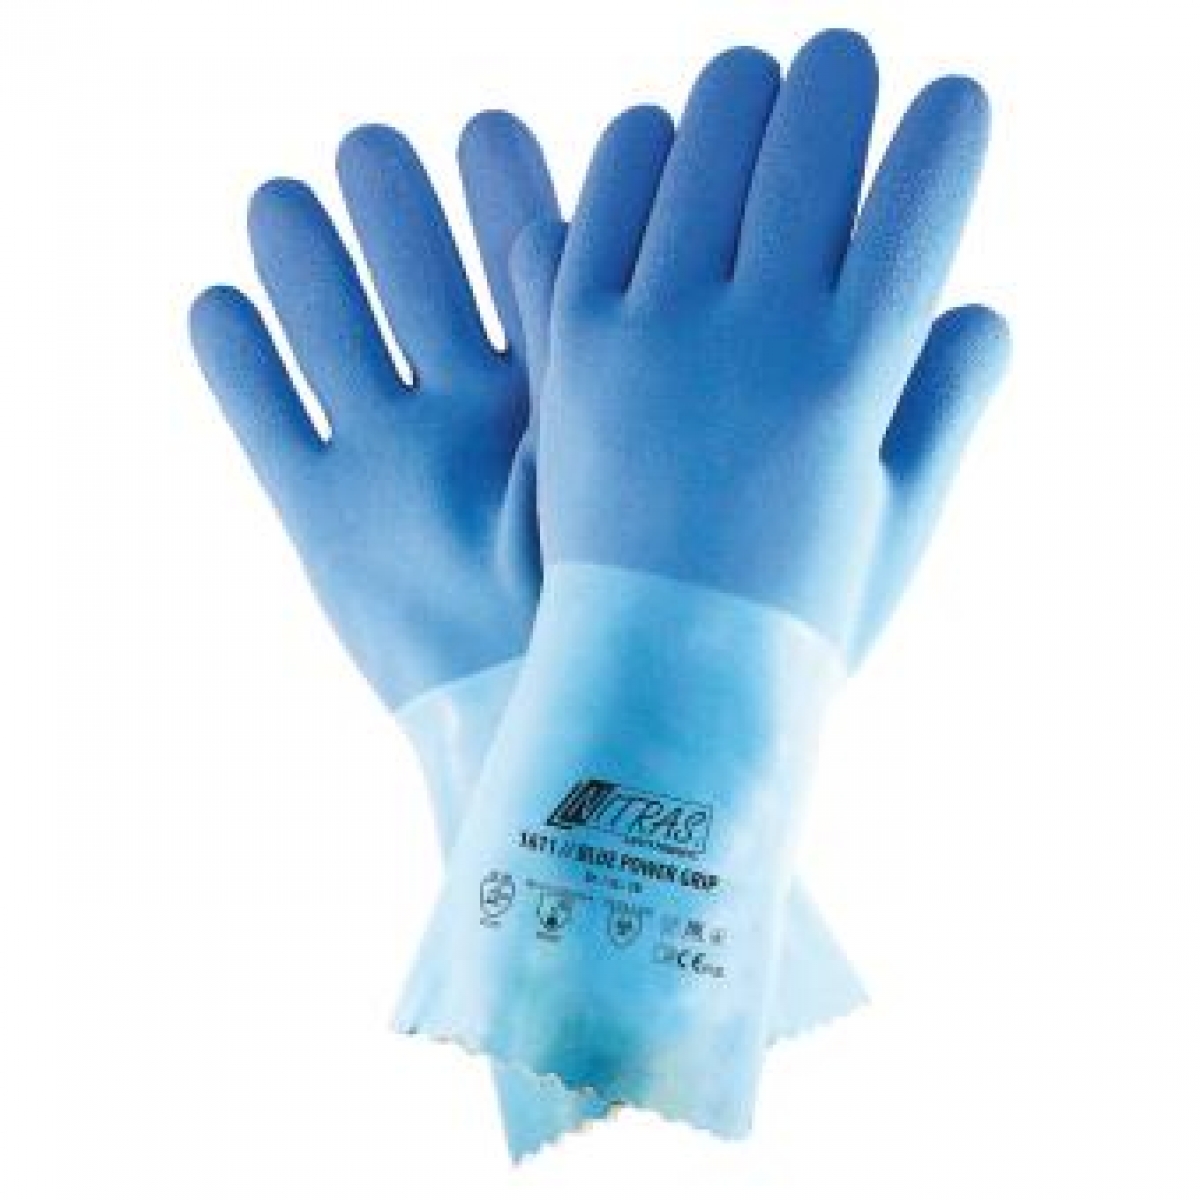 NITRAS BLUE POWER GRIP, Chemikalienschutzhandschuhe, Latex, blau, VE = 12 Paar